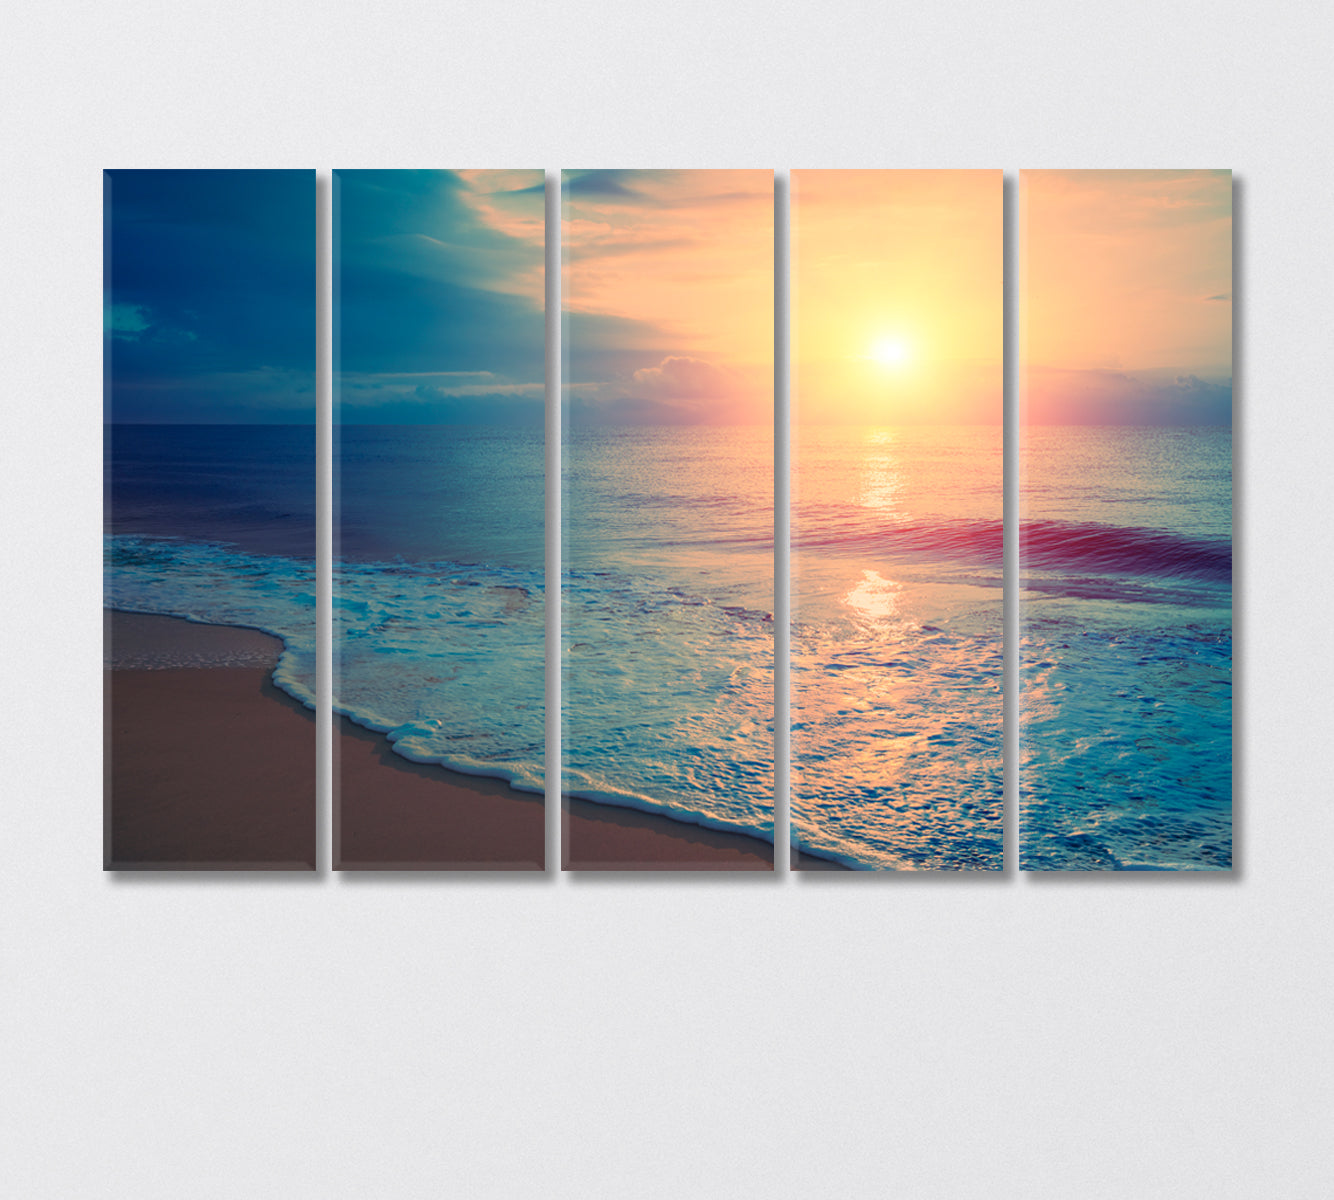 Seascape Sunrise over the Sea Canvas Print-Canvas Print-CetArt-5 Panels-36x24 inches-CetArt